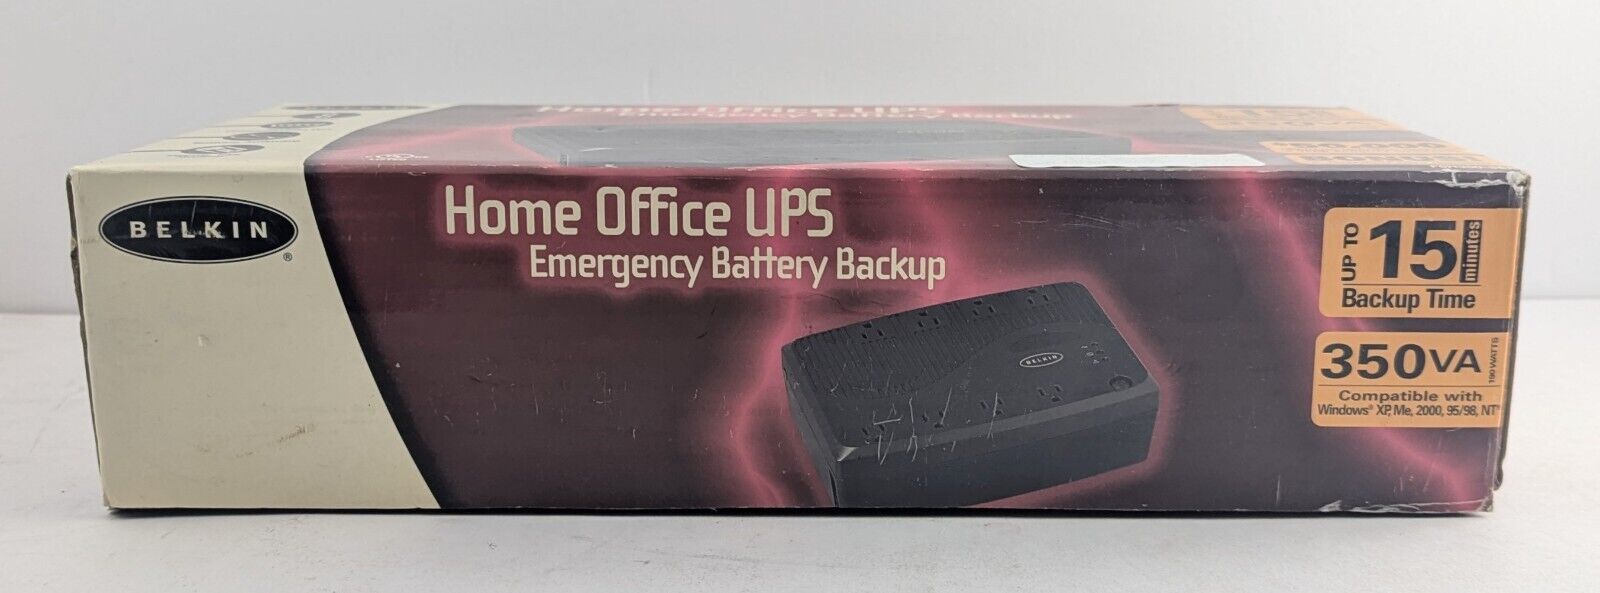 Belkin Home Office UPS Emergency Battery Backup 350VA NEW FACTORY SEALED